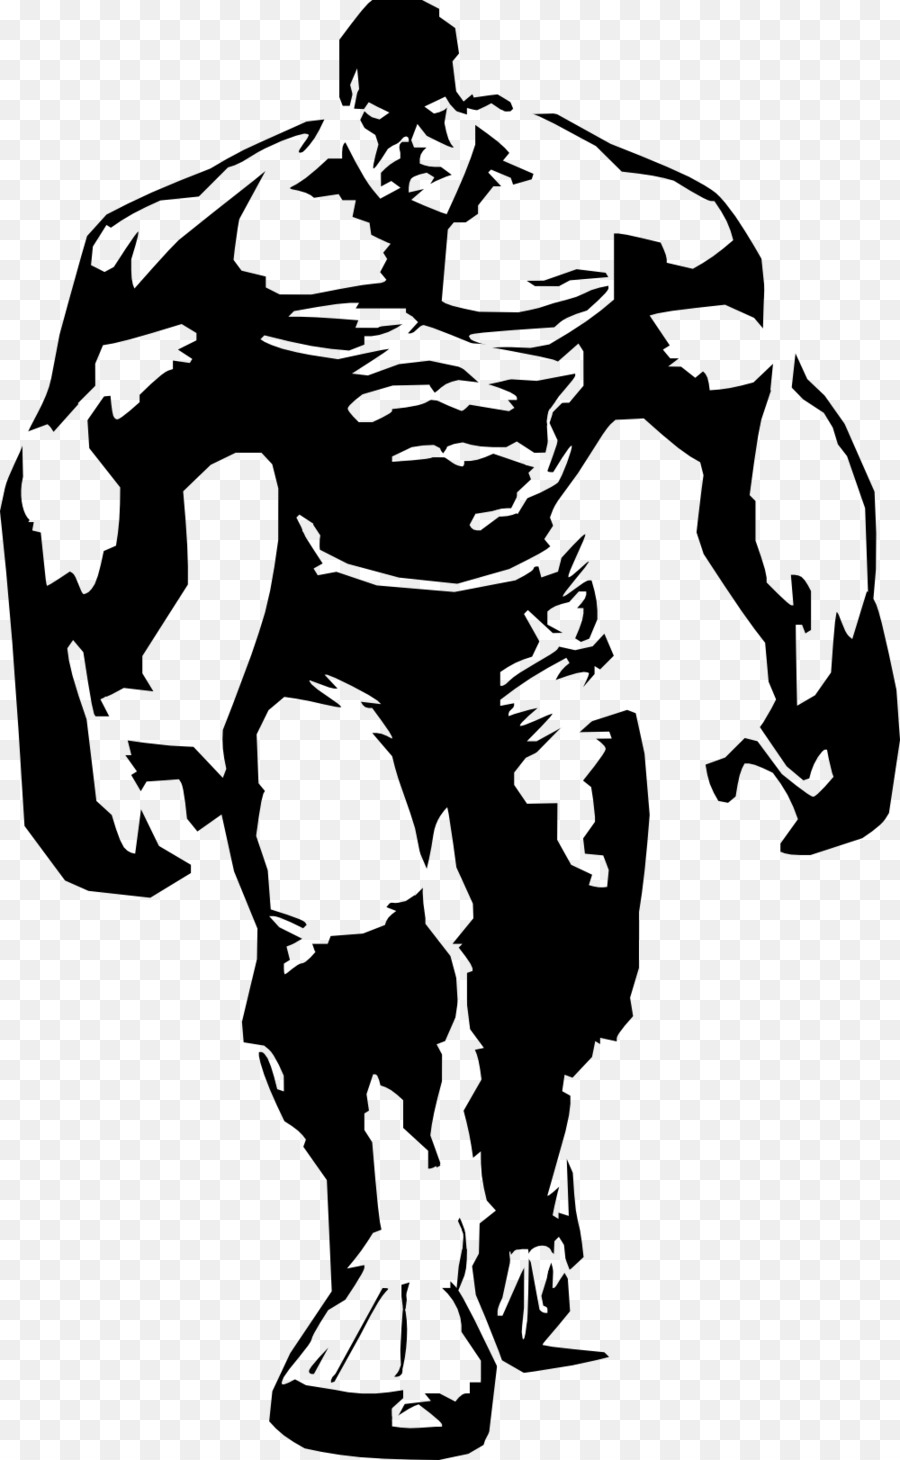 Hulk Stencil Airbrush Superhero - bodybuilding png download - 1000*1622 - Free Transparent Hulk png Download.